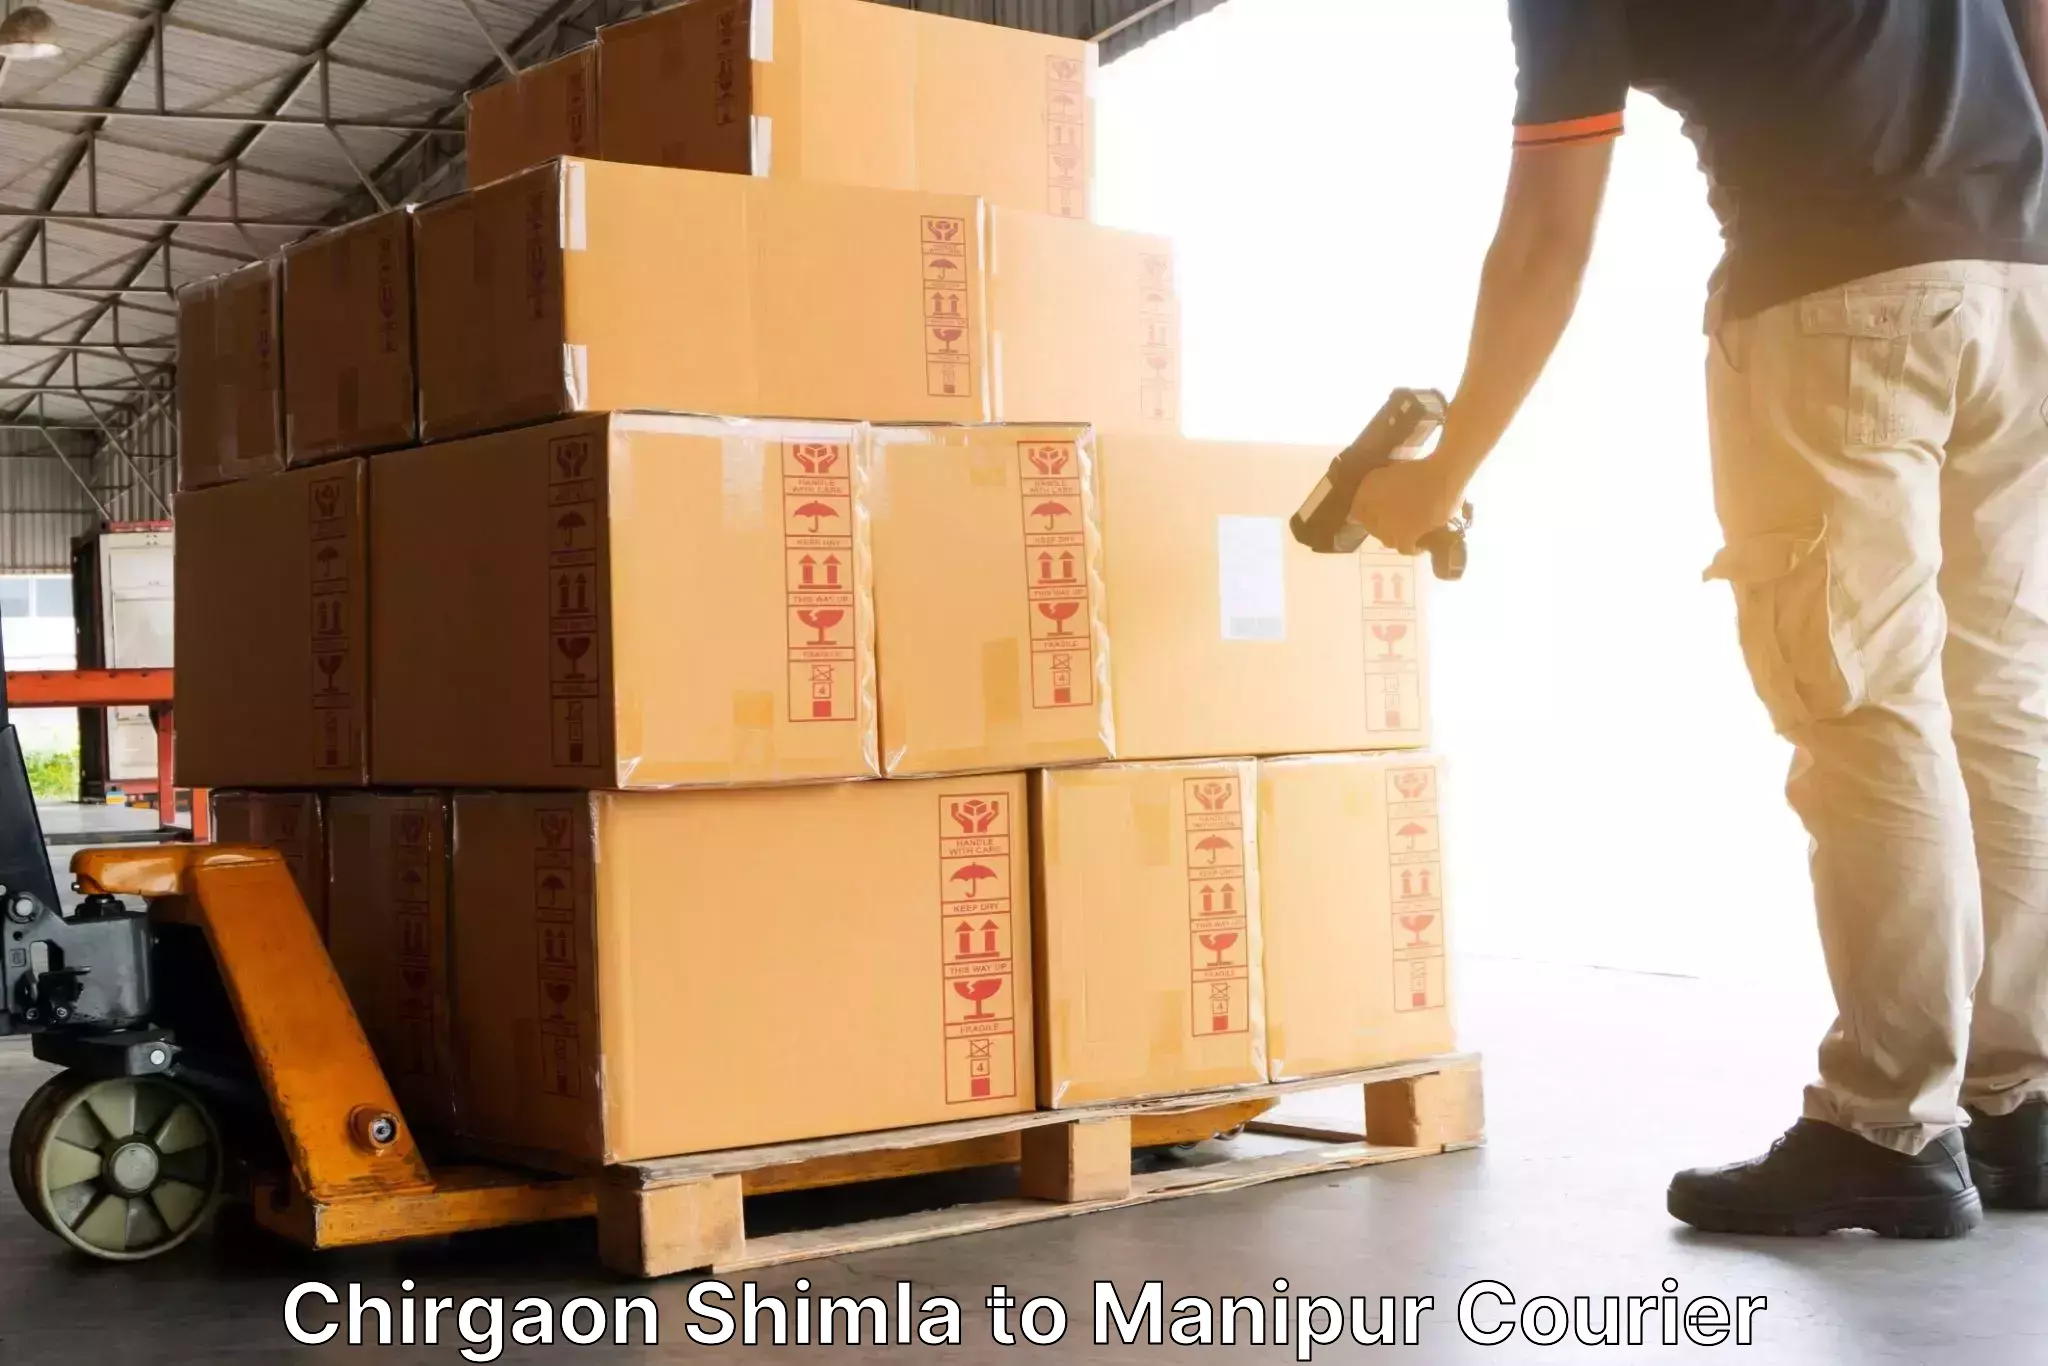 Logistics service provider Chirgaon Shimla to Churachandpur